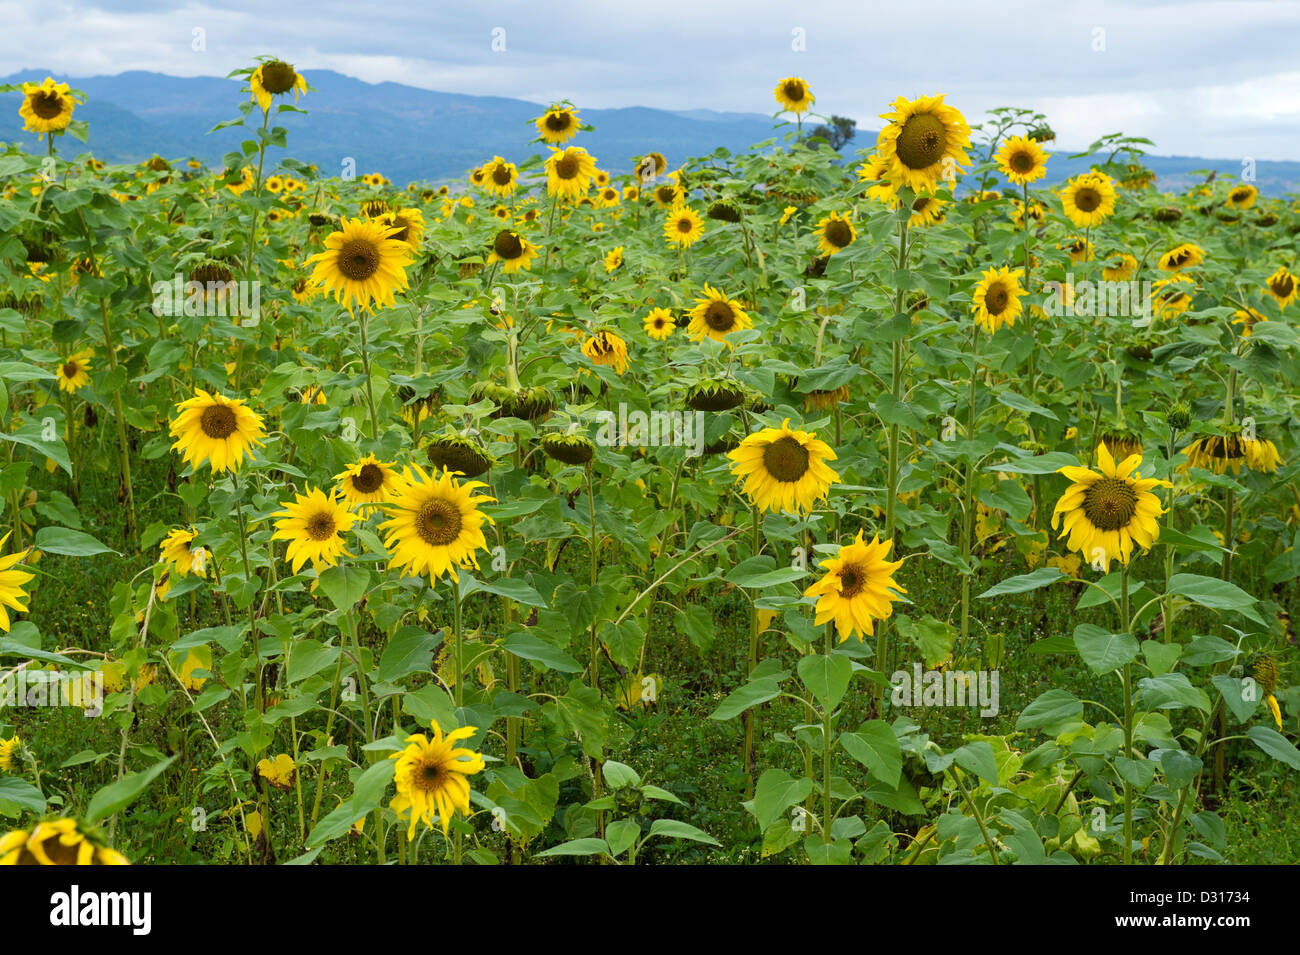 Sunflowers on the footslopes of Mount Elgon, Kitale, Kenya Stock Photo